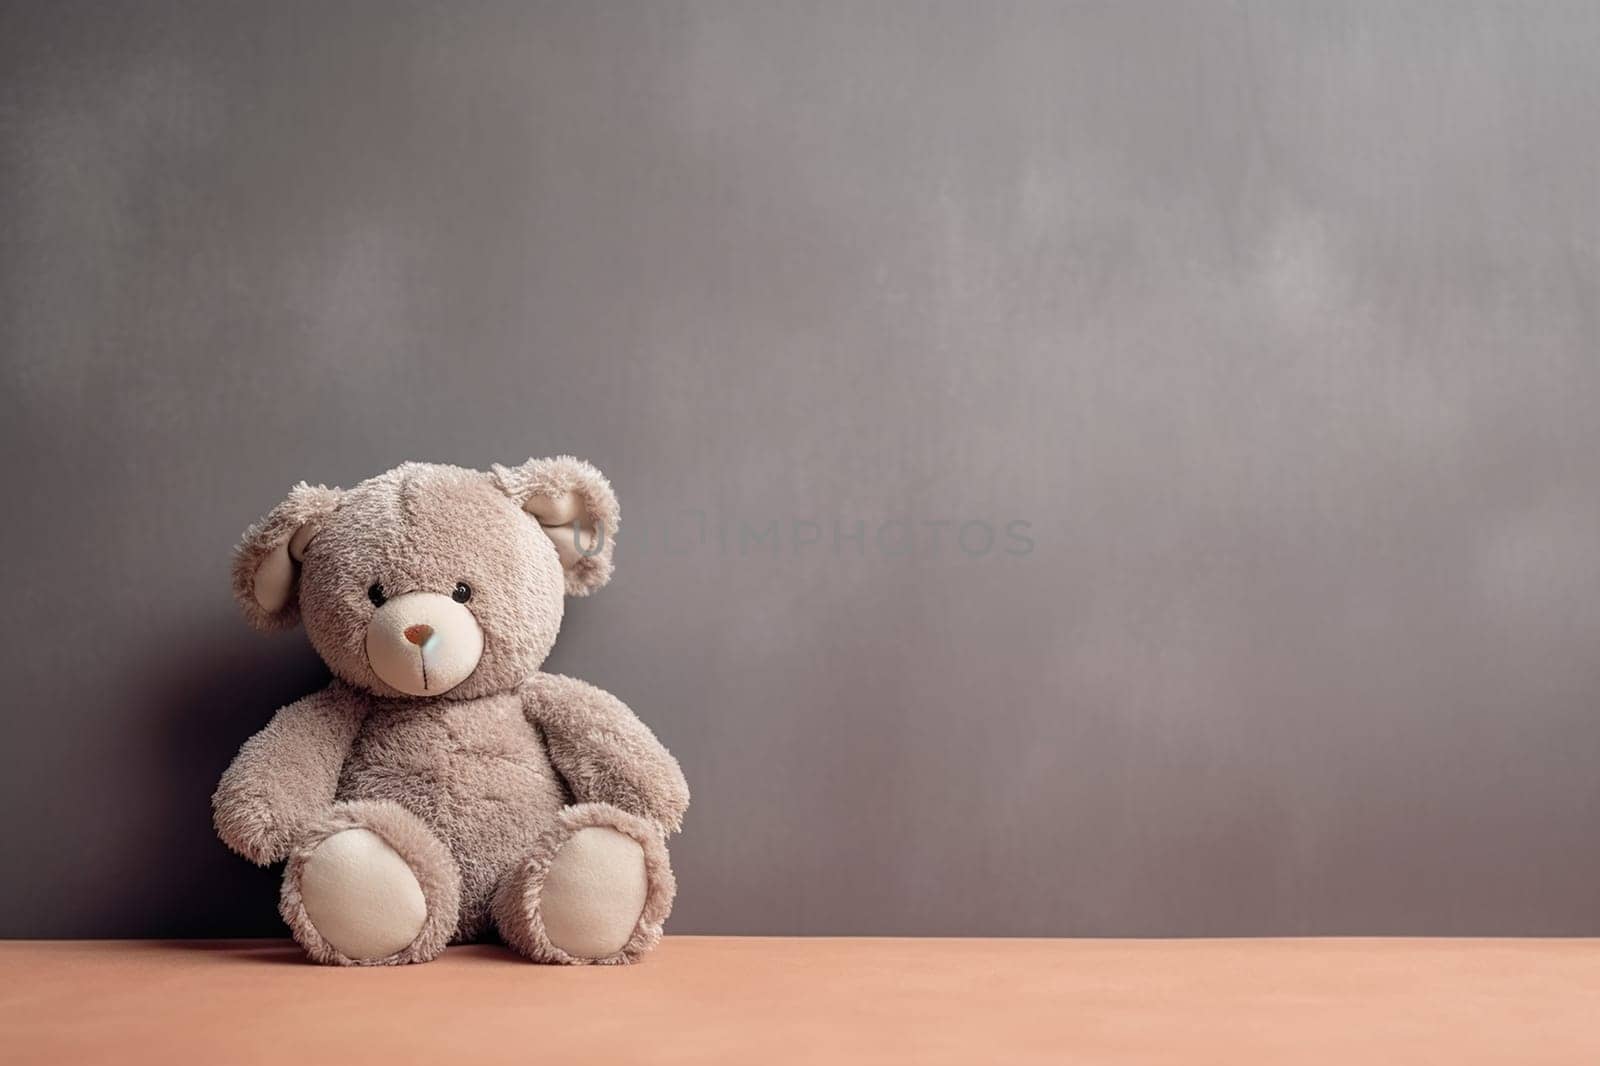 A grey teddy bear sitting on a wooden surface against a plain background